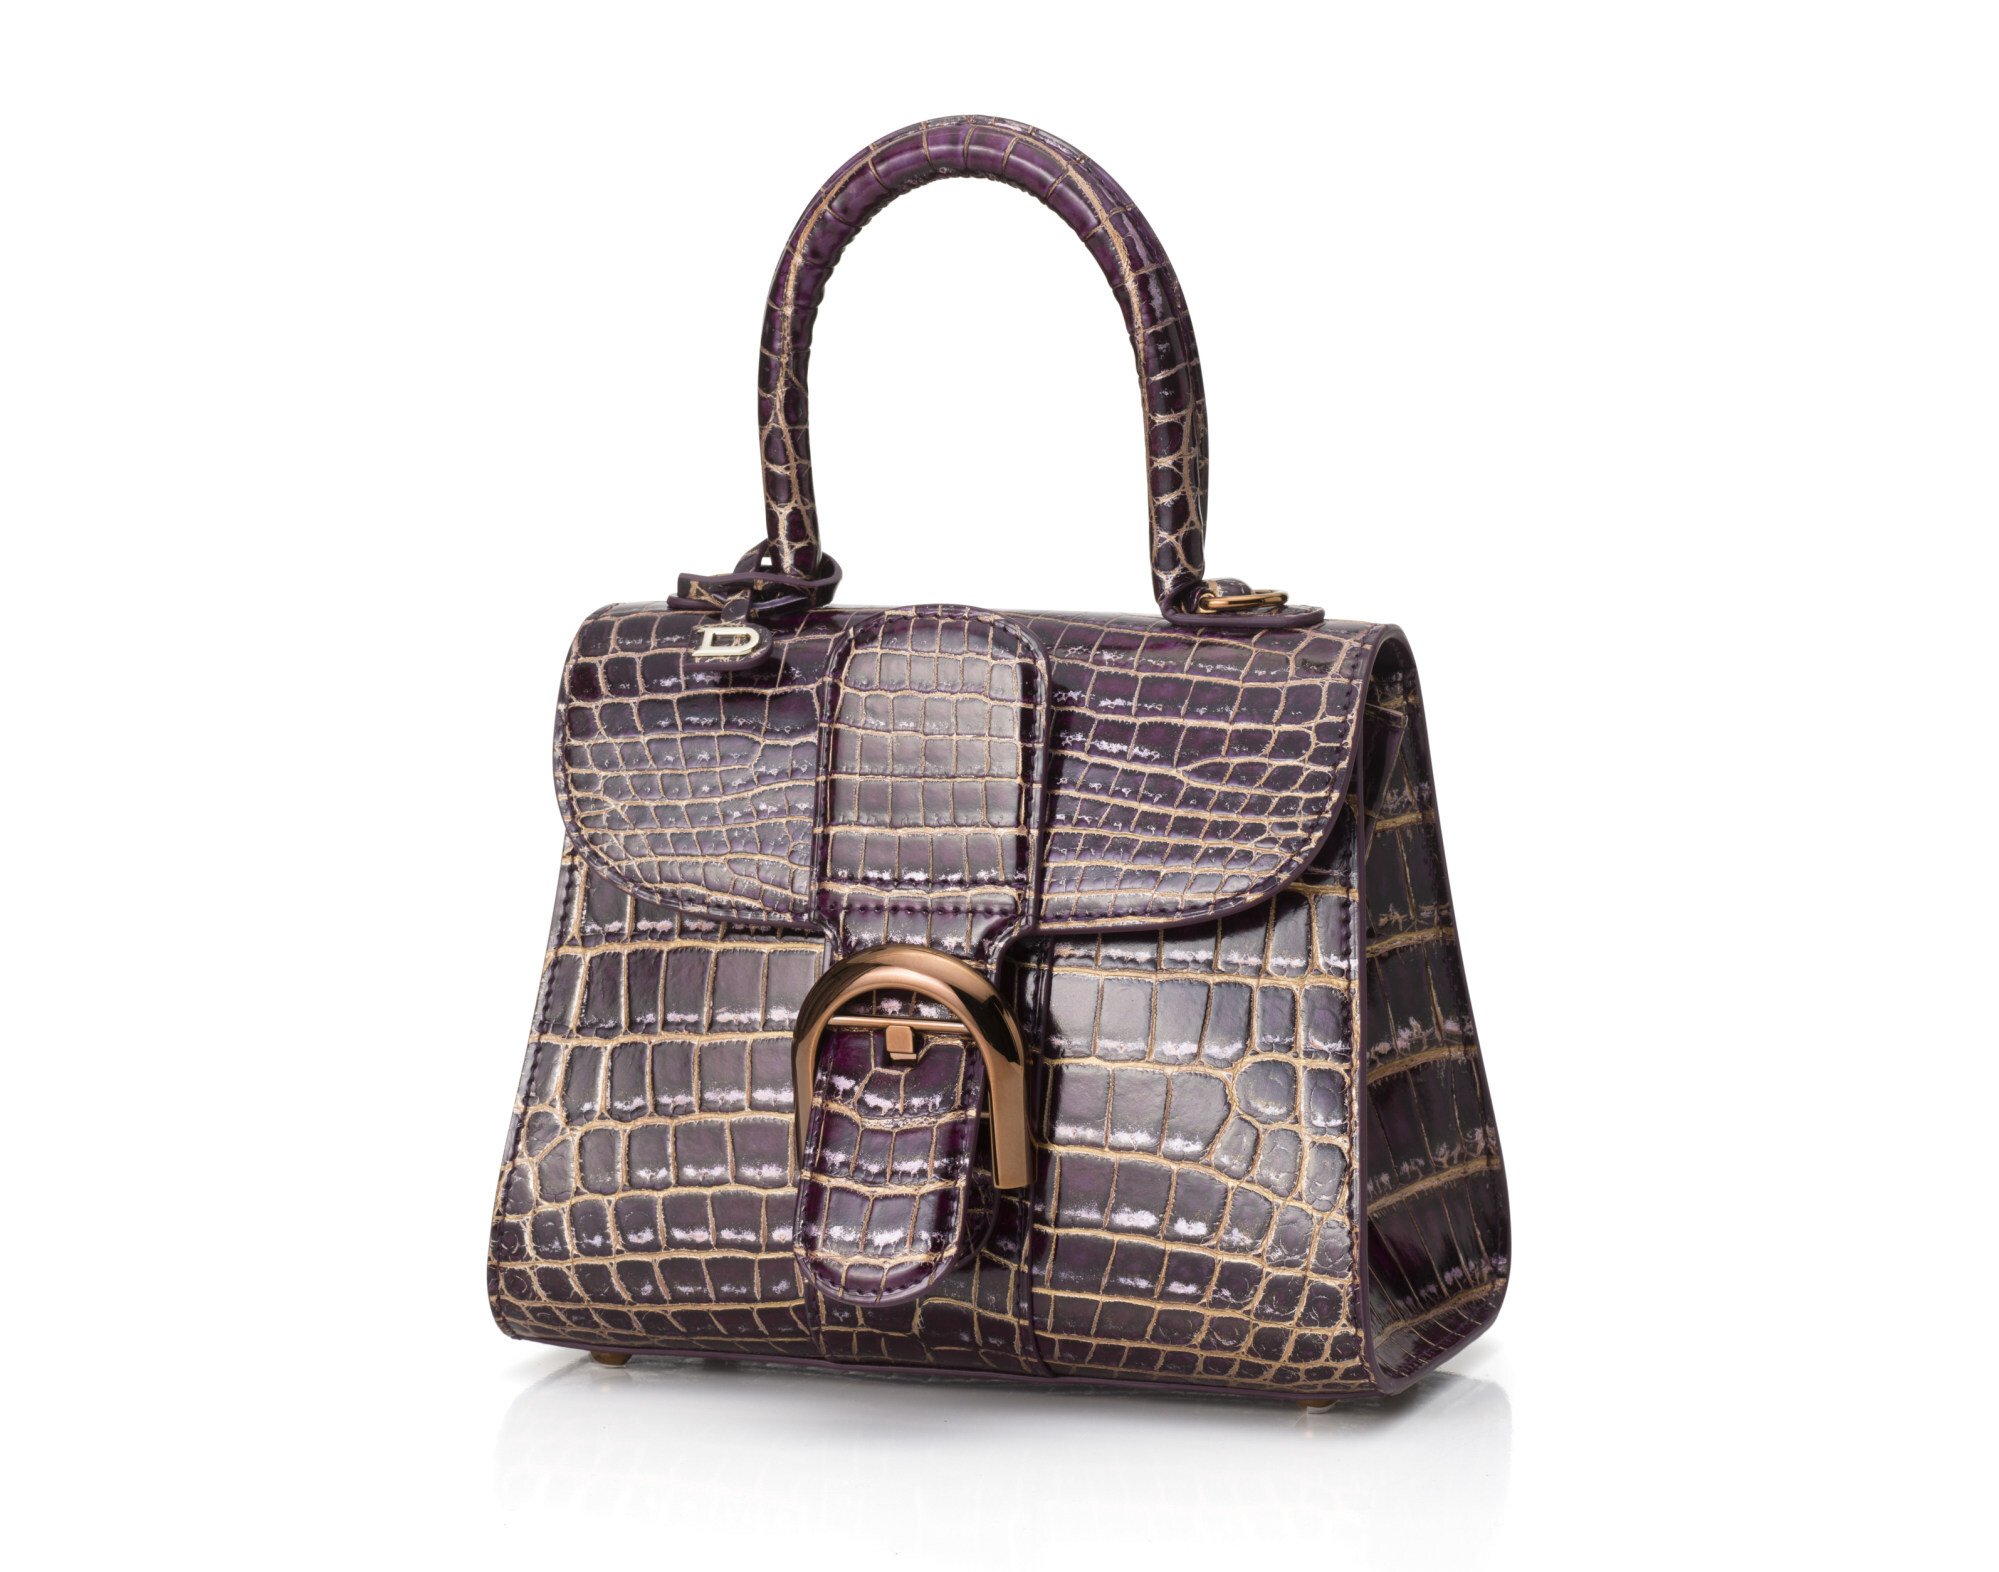 Luxury Handbag Brand Delvaux